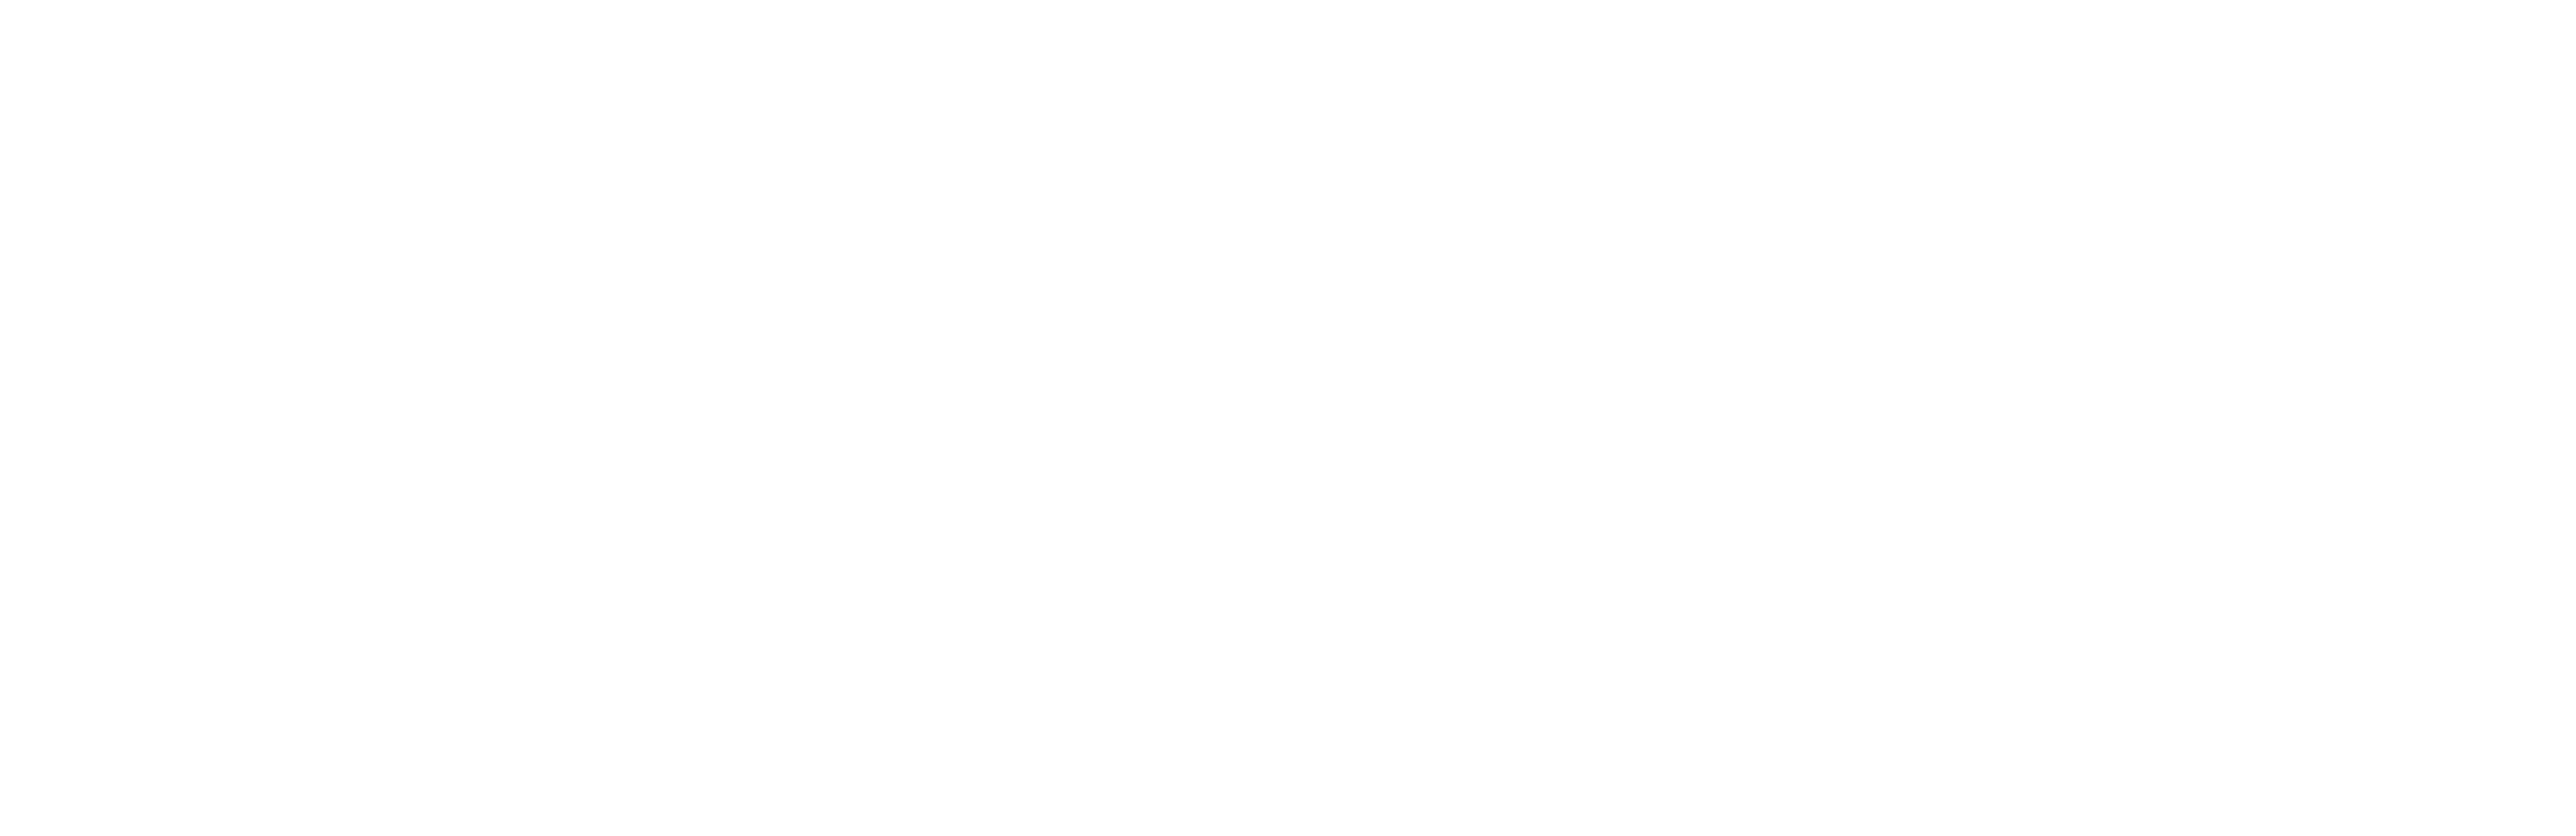 The Greatest Hits logo